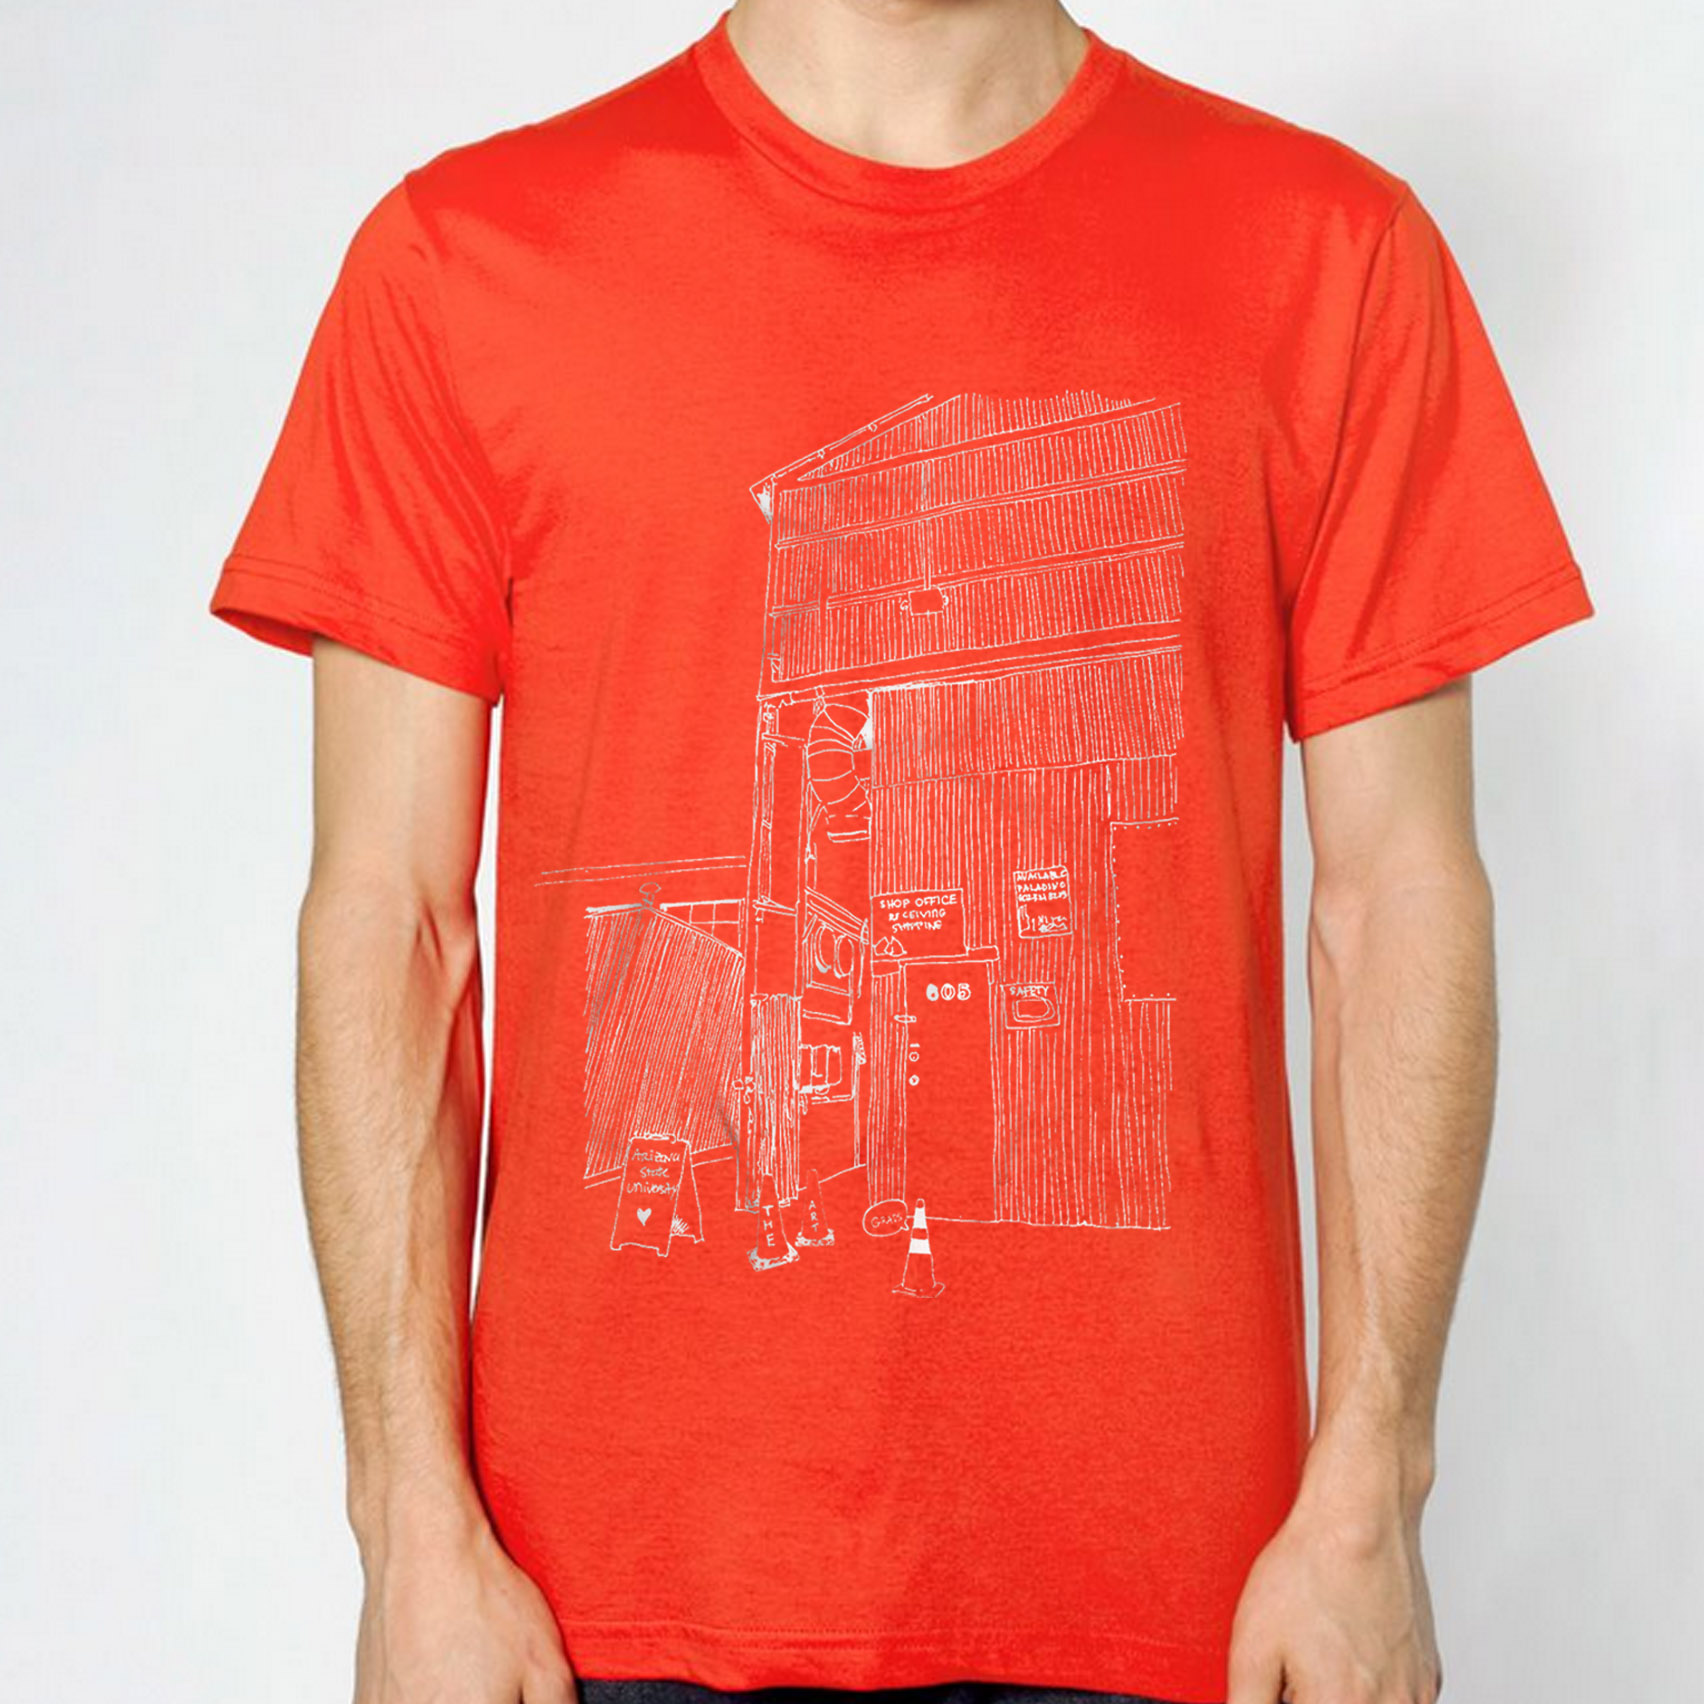 The Art Grads t-shirt design by Kate Horvat